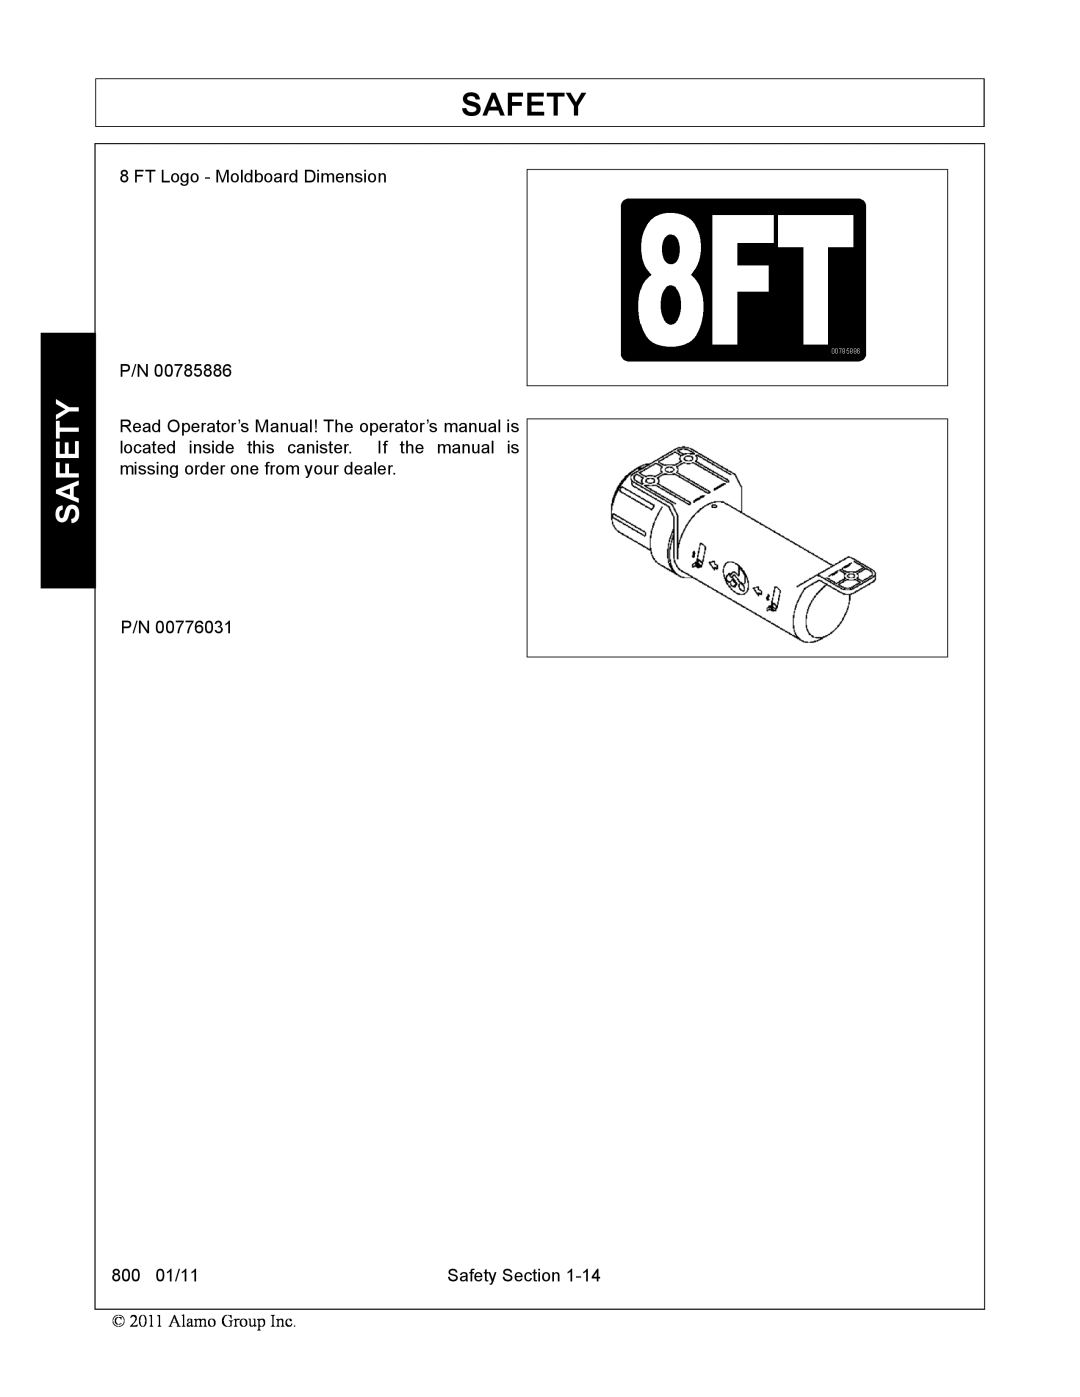 Alamo manual FT Logo - Moldboard Dimension P/N, 800 01/11, Safety Section 